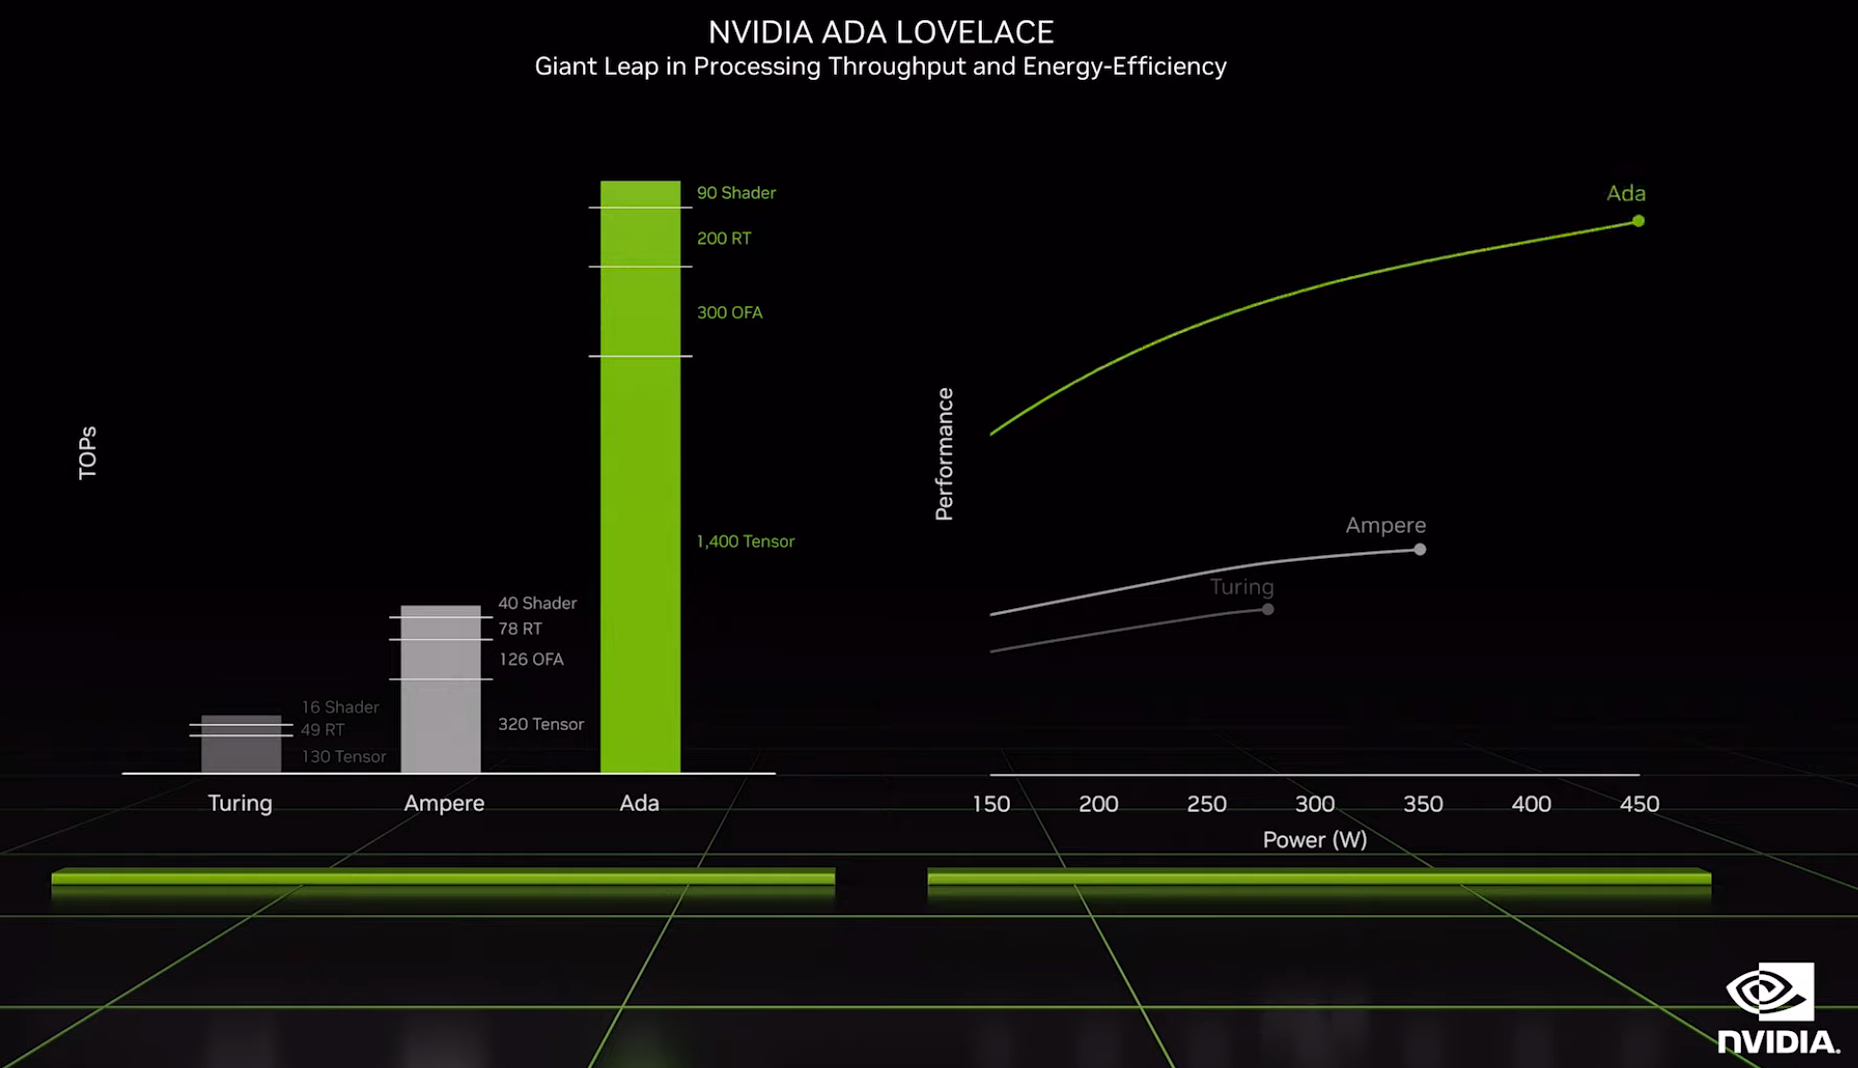 NVIDIA ADA Lovelace Power Consumption